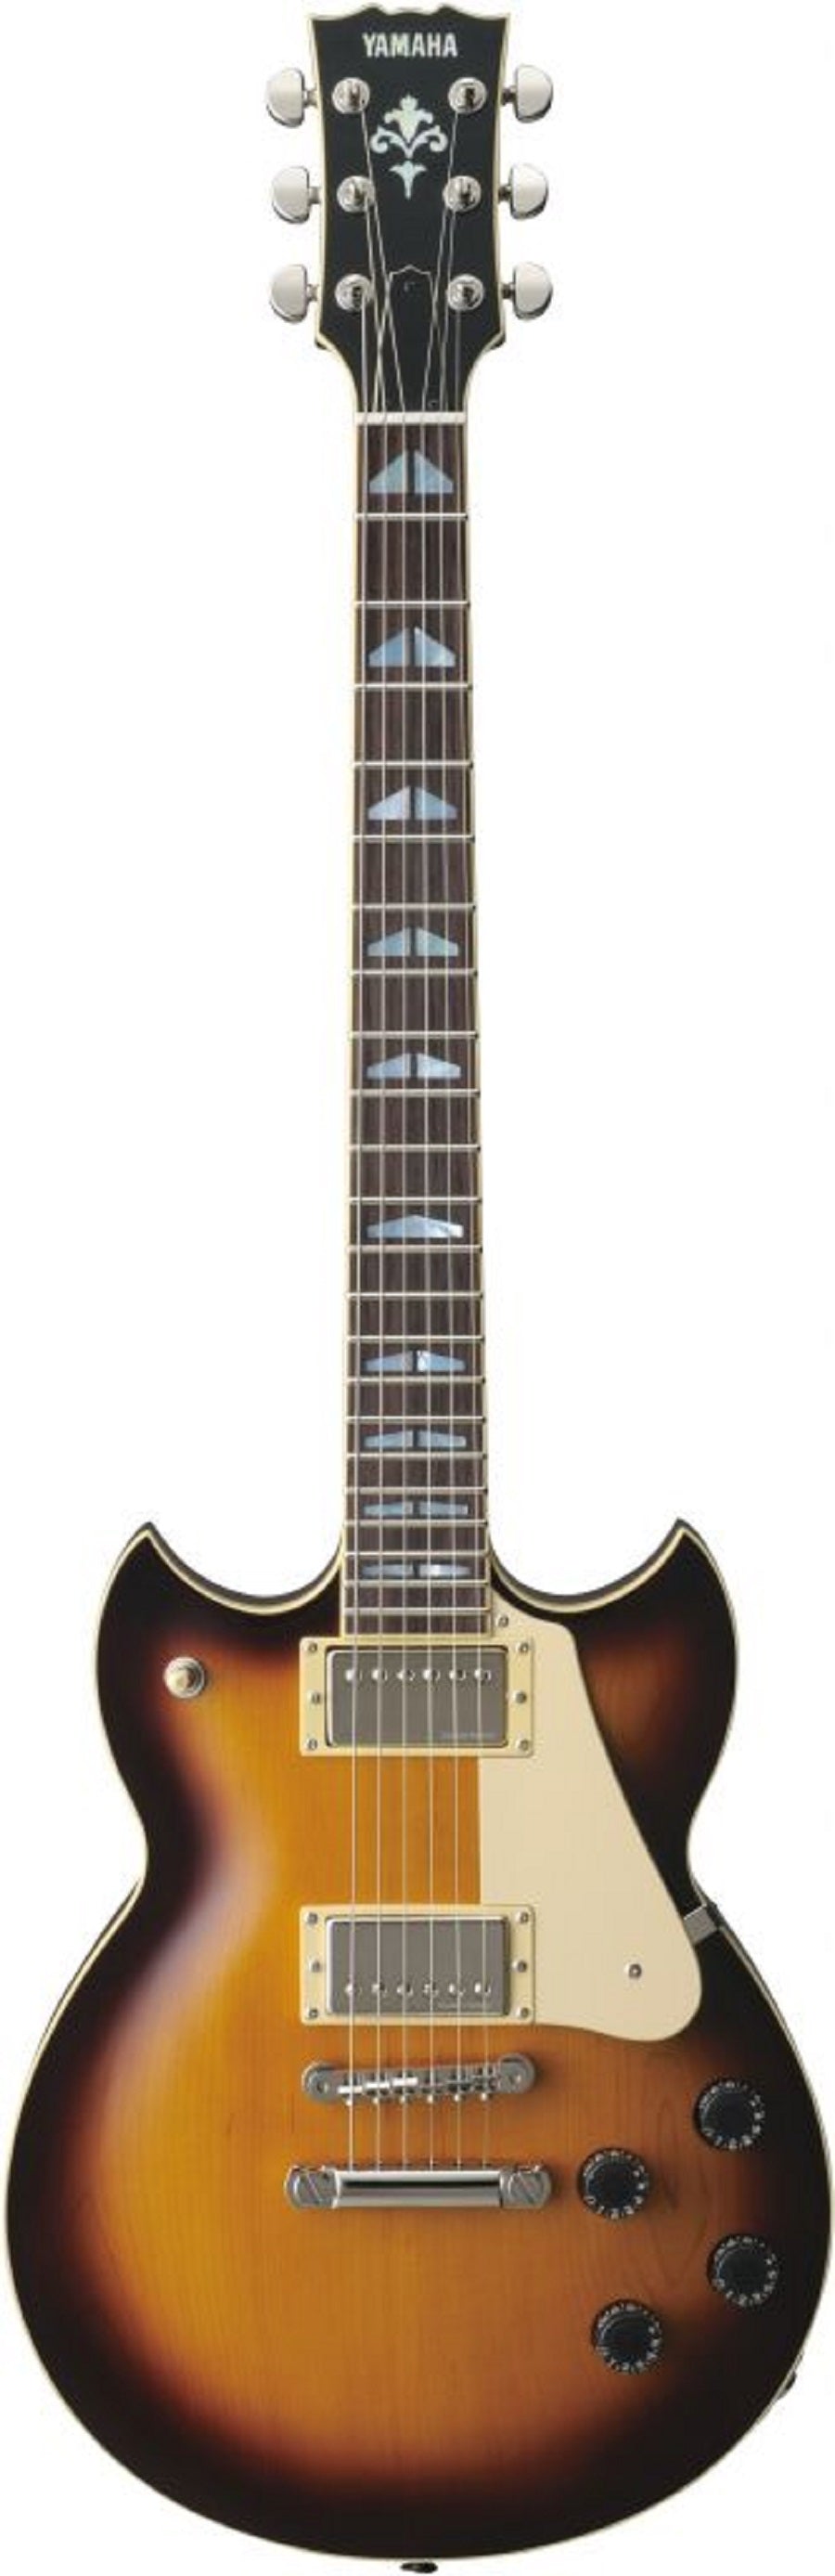 Yamaha SG1820 Electric Guitar - Brown Sunburst